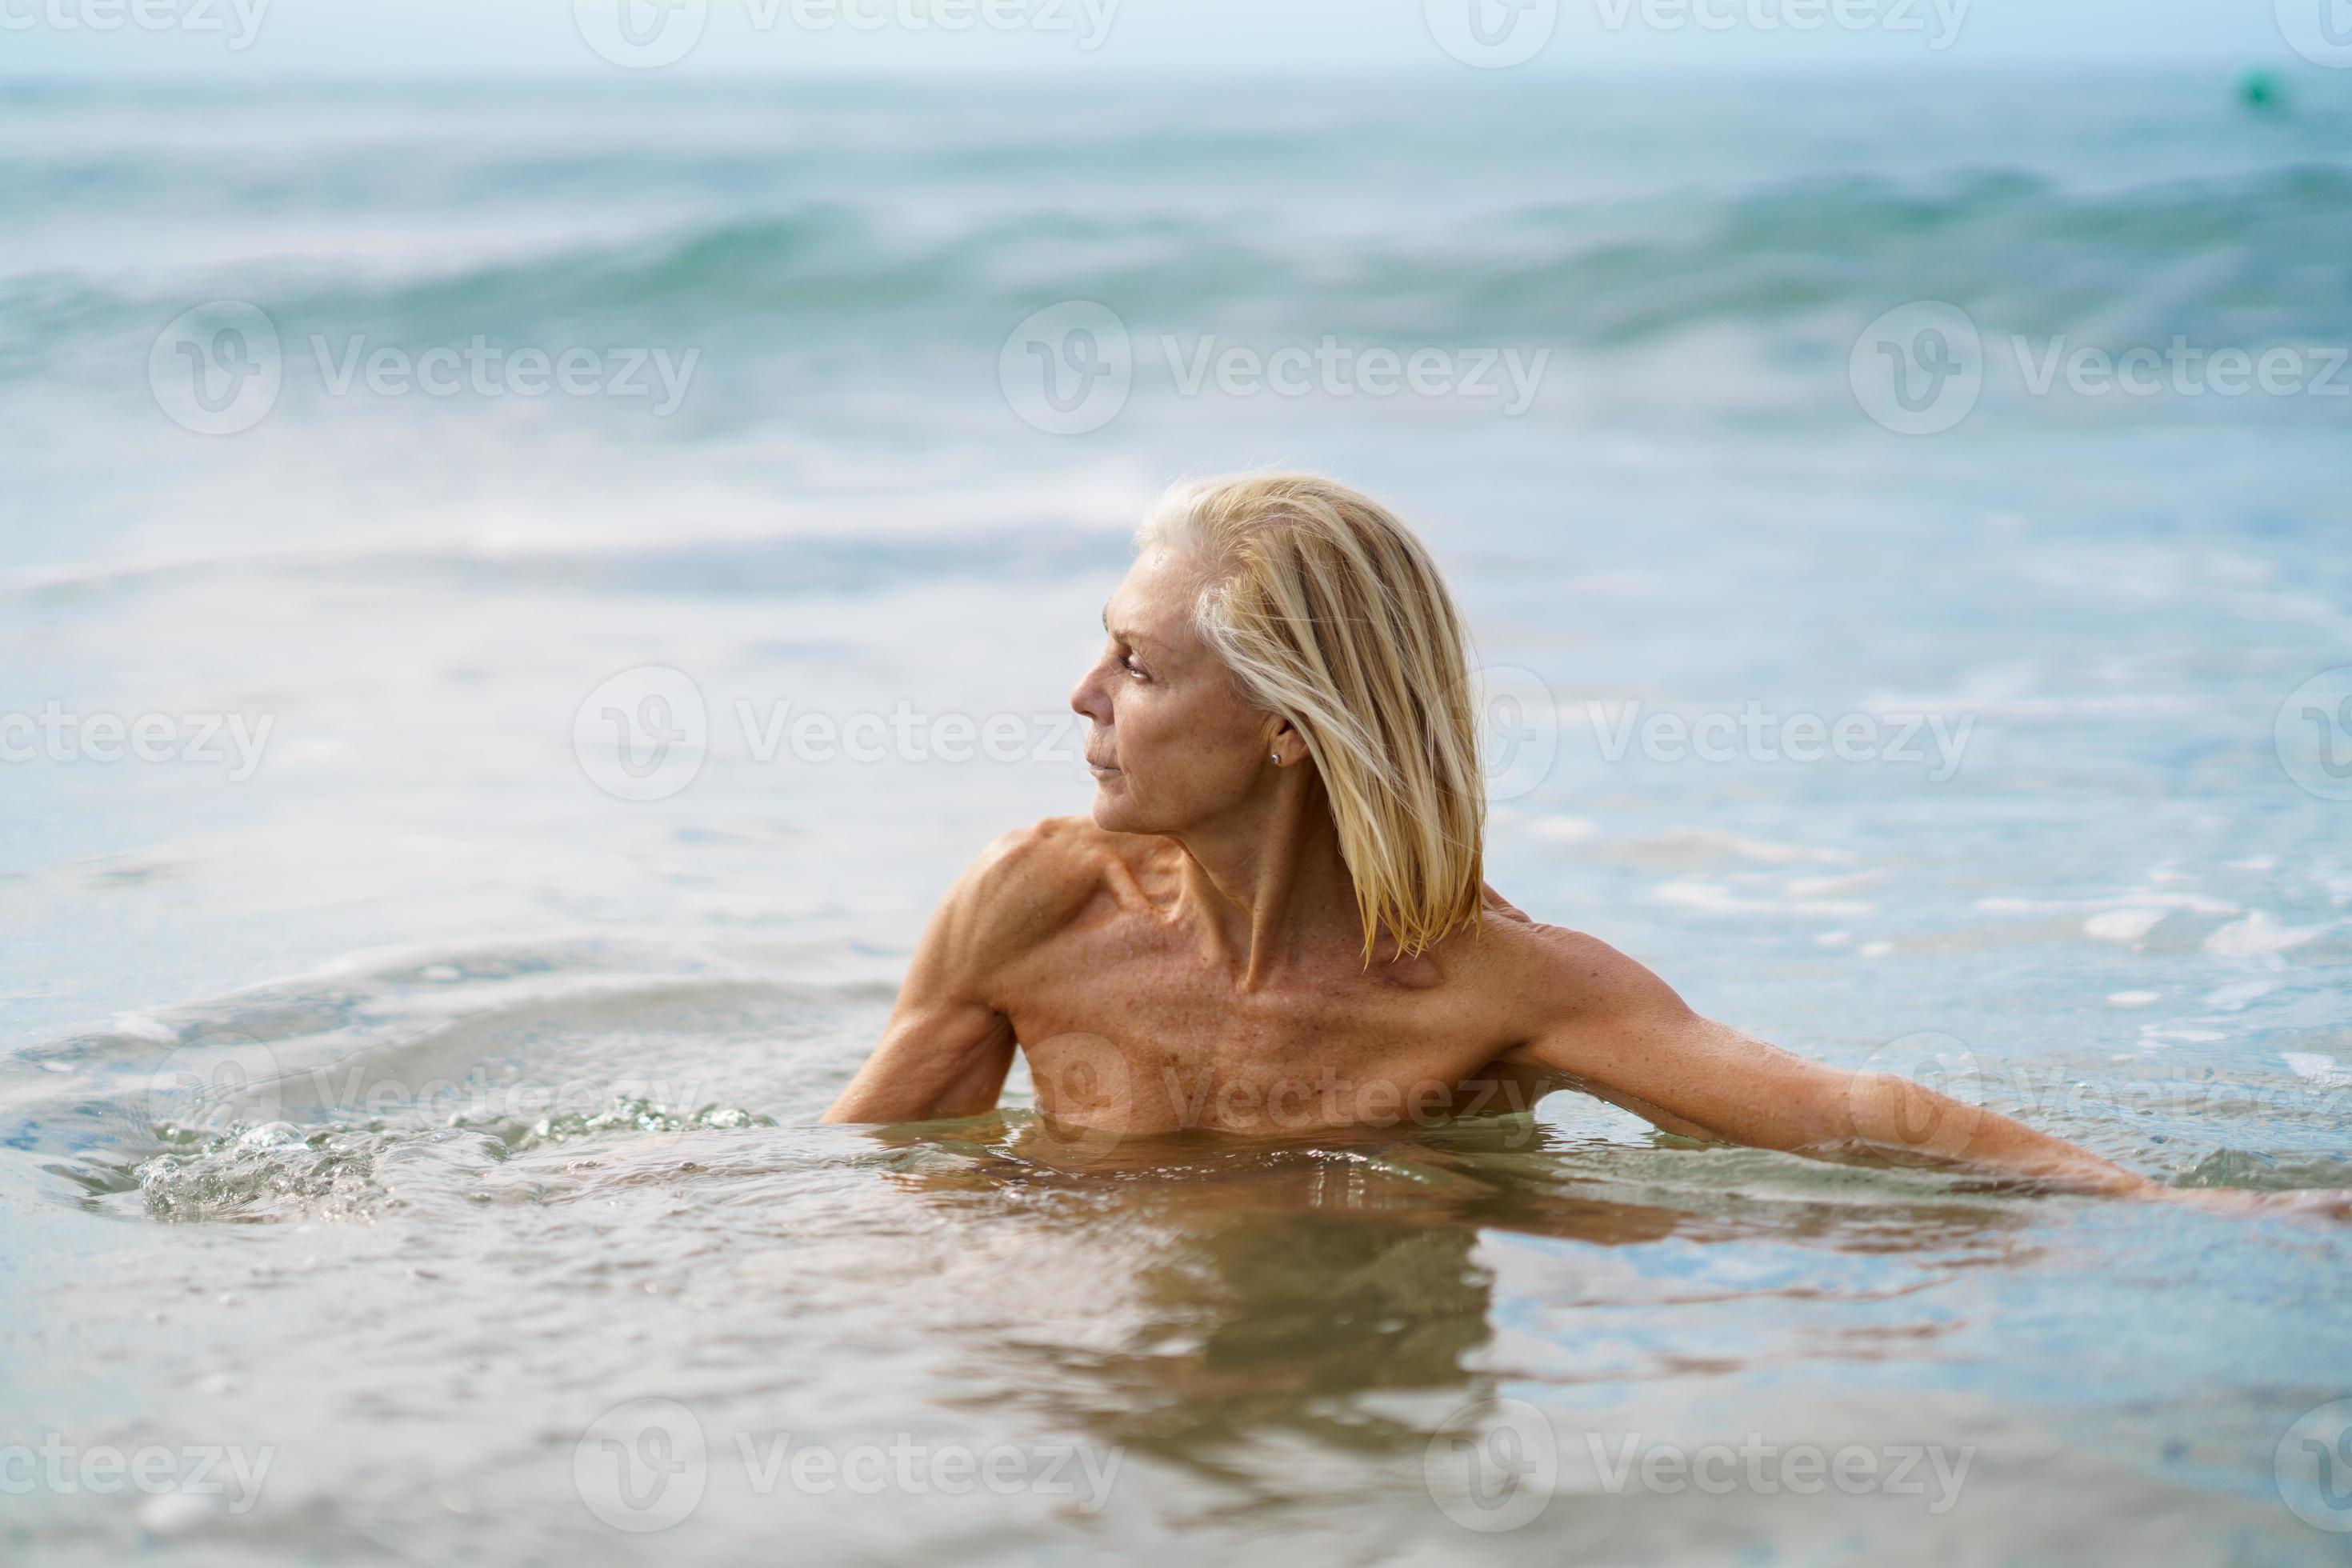 aung soe lwin add photo mature beach nudist